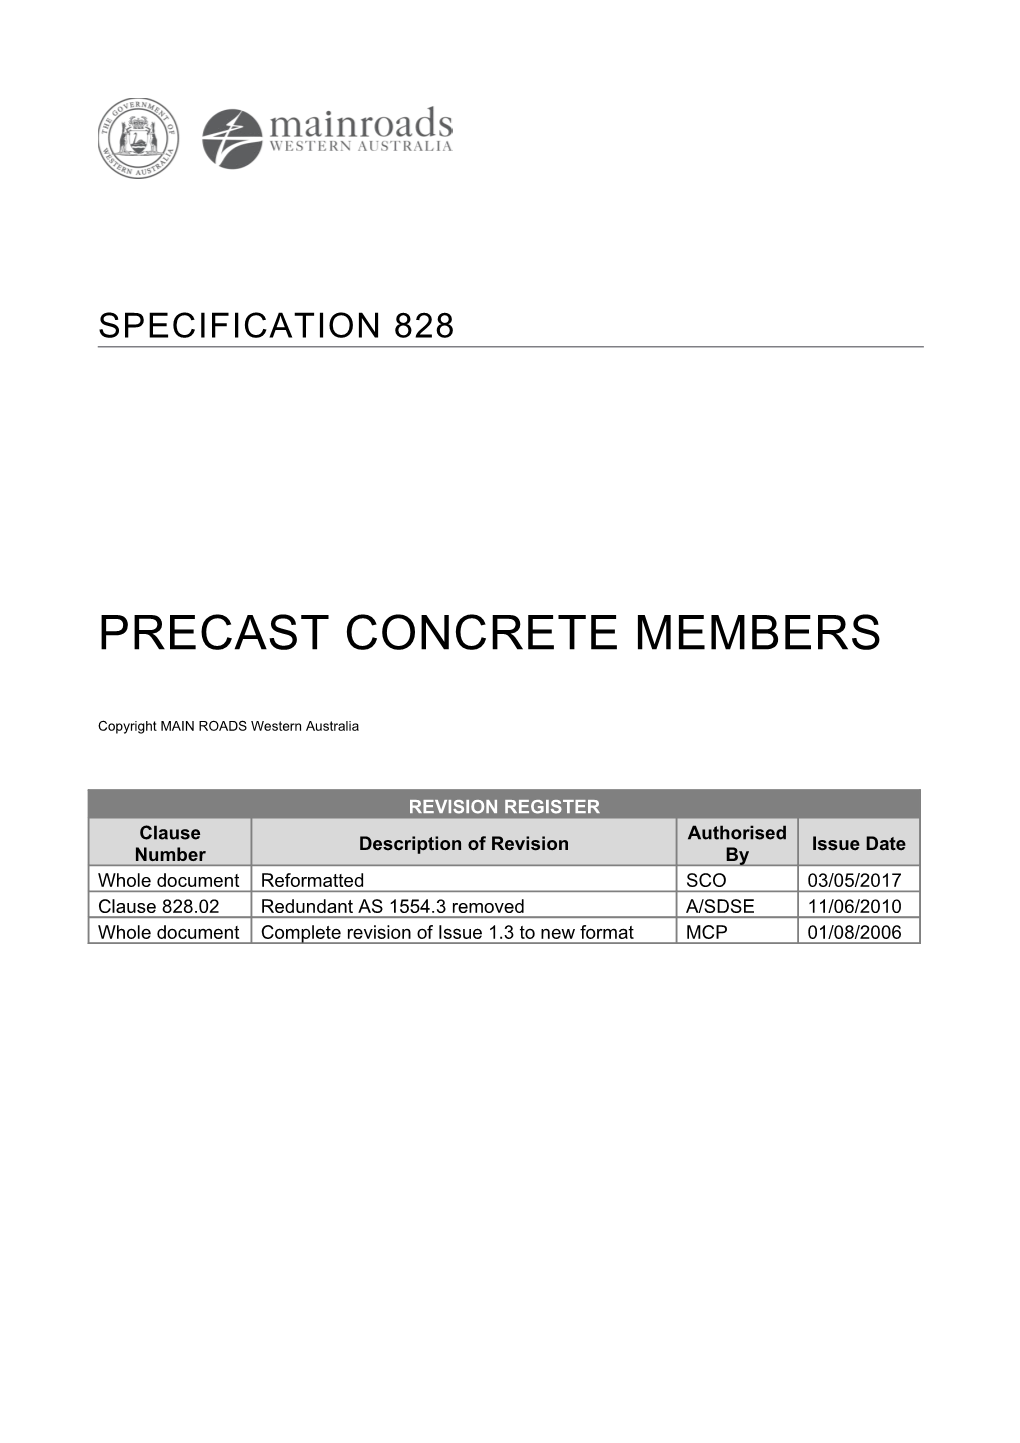 Precast Concrete Members